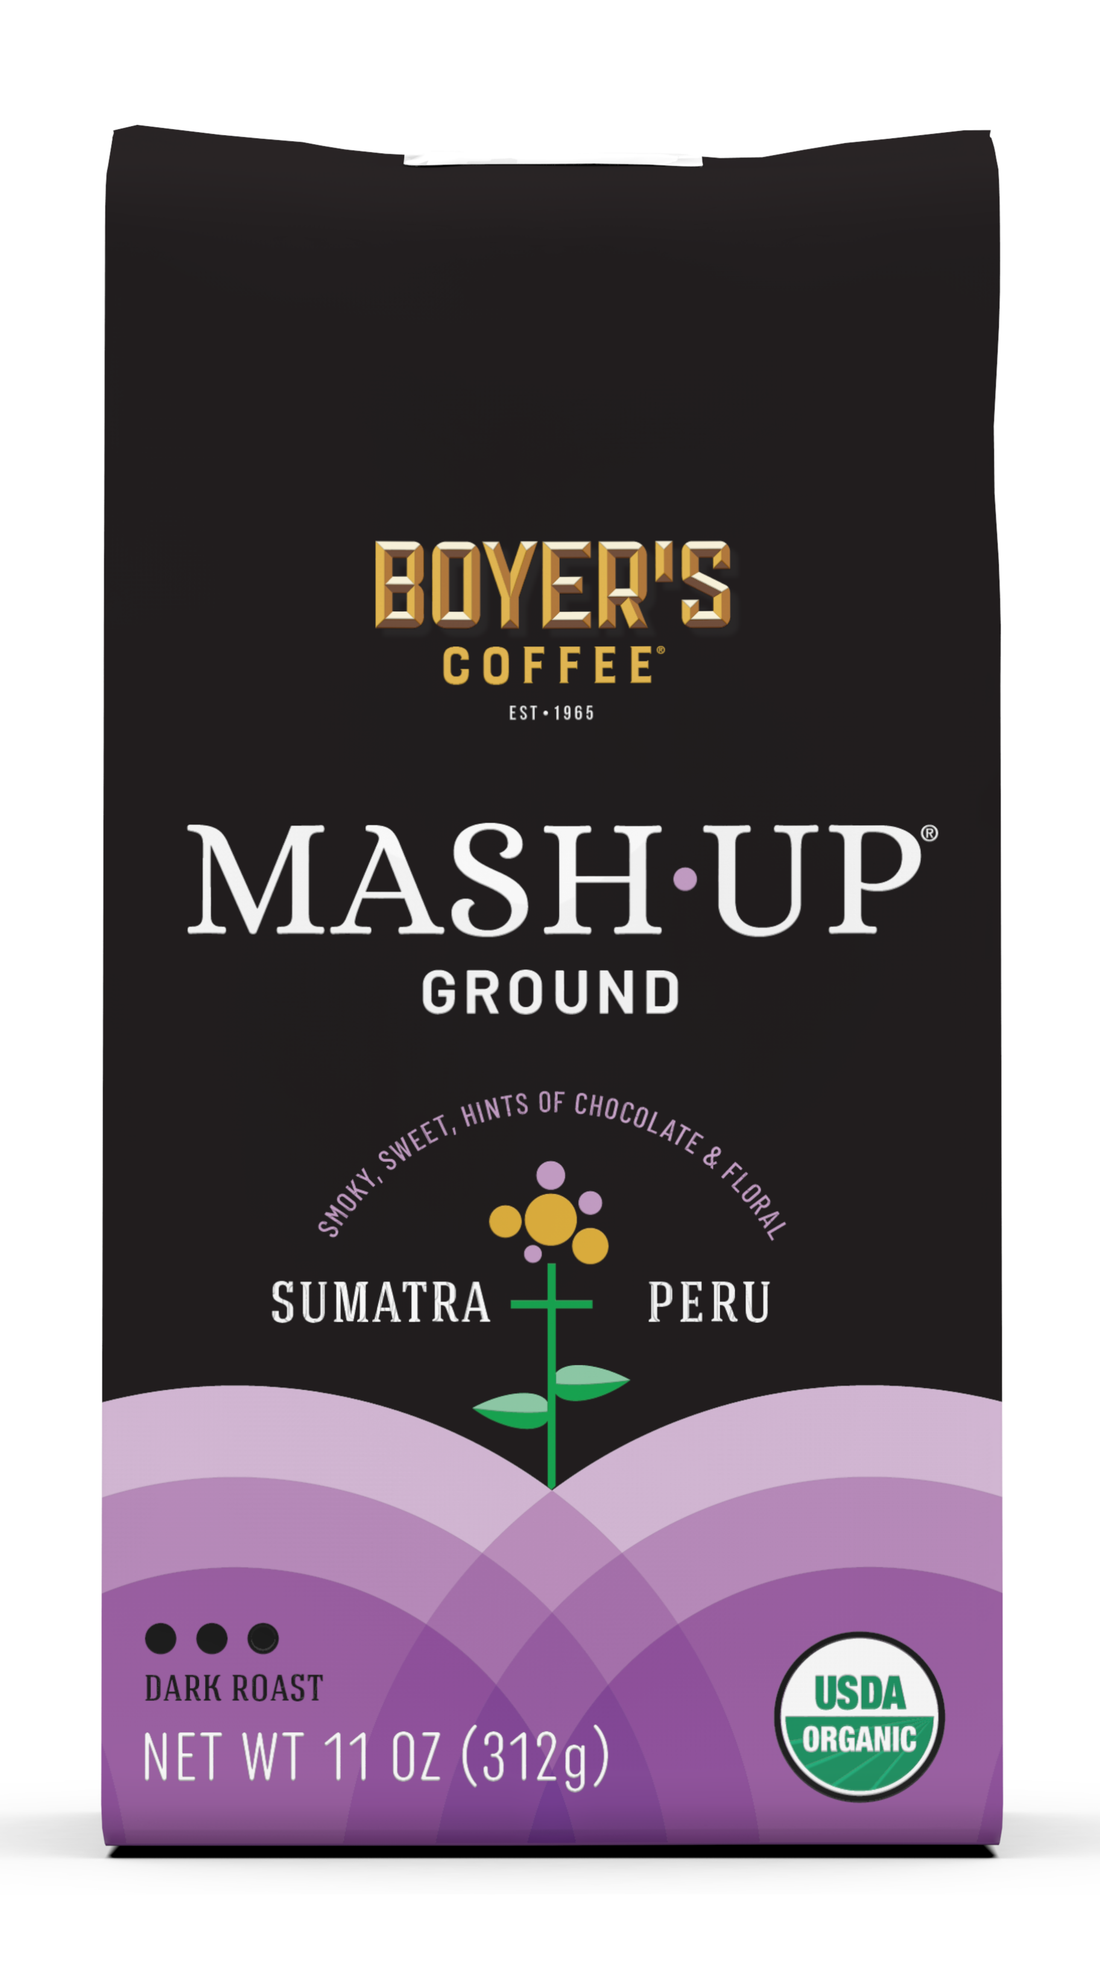 Sumatra + Peru Mash-Up Coffee